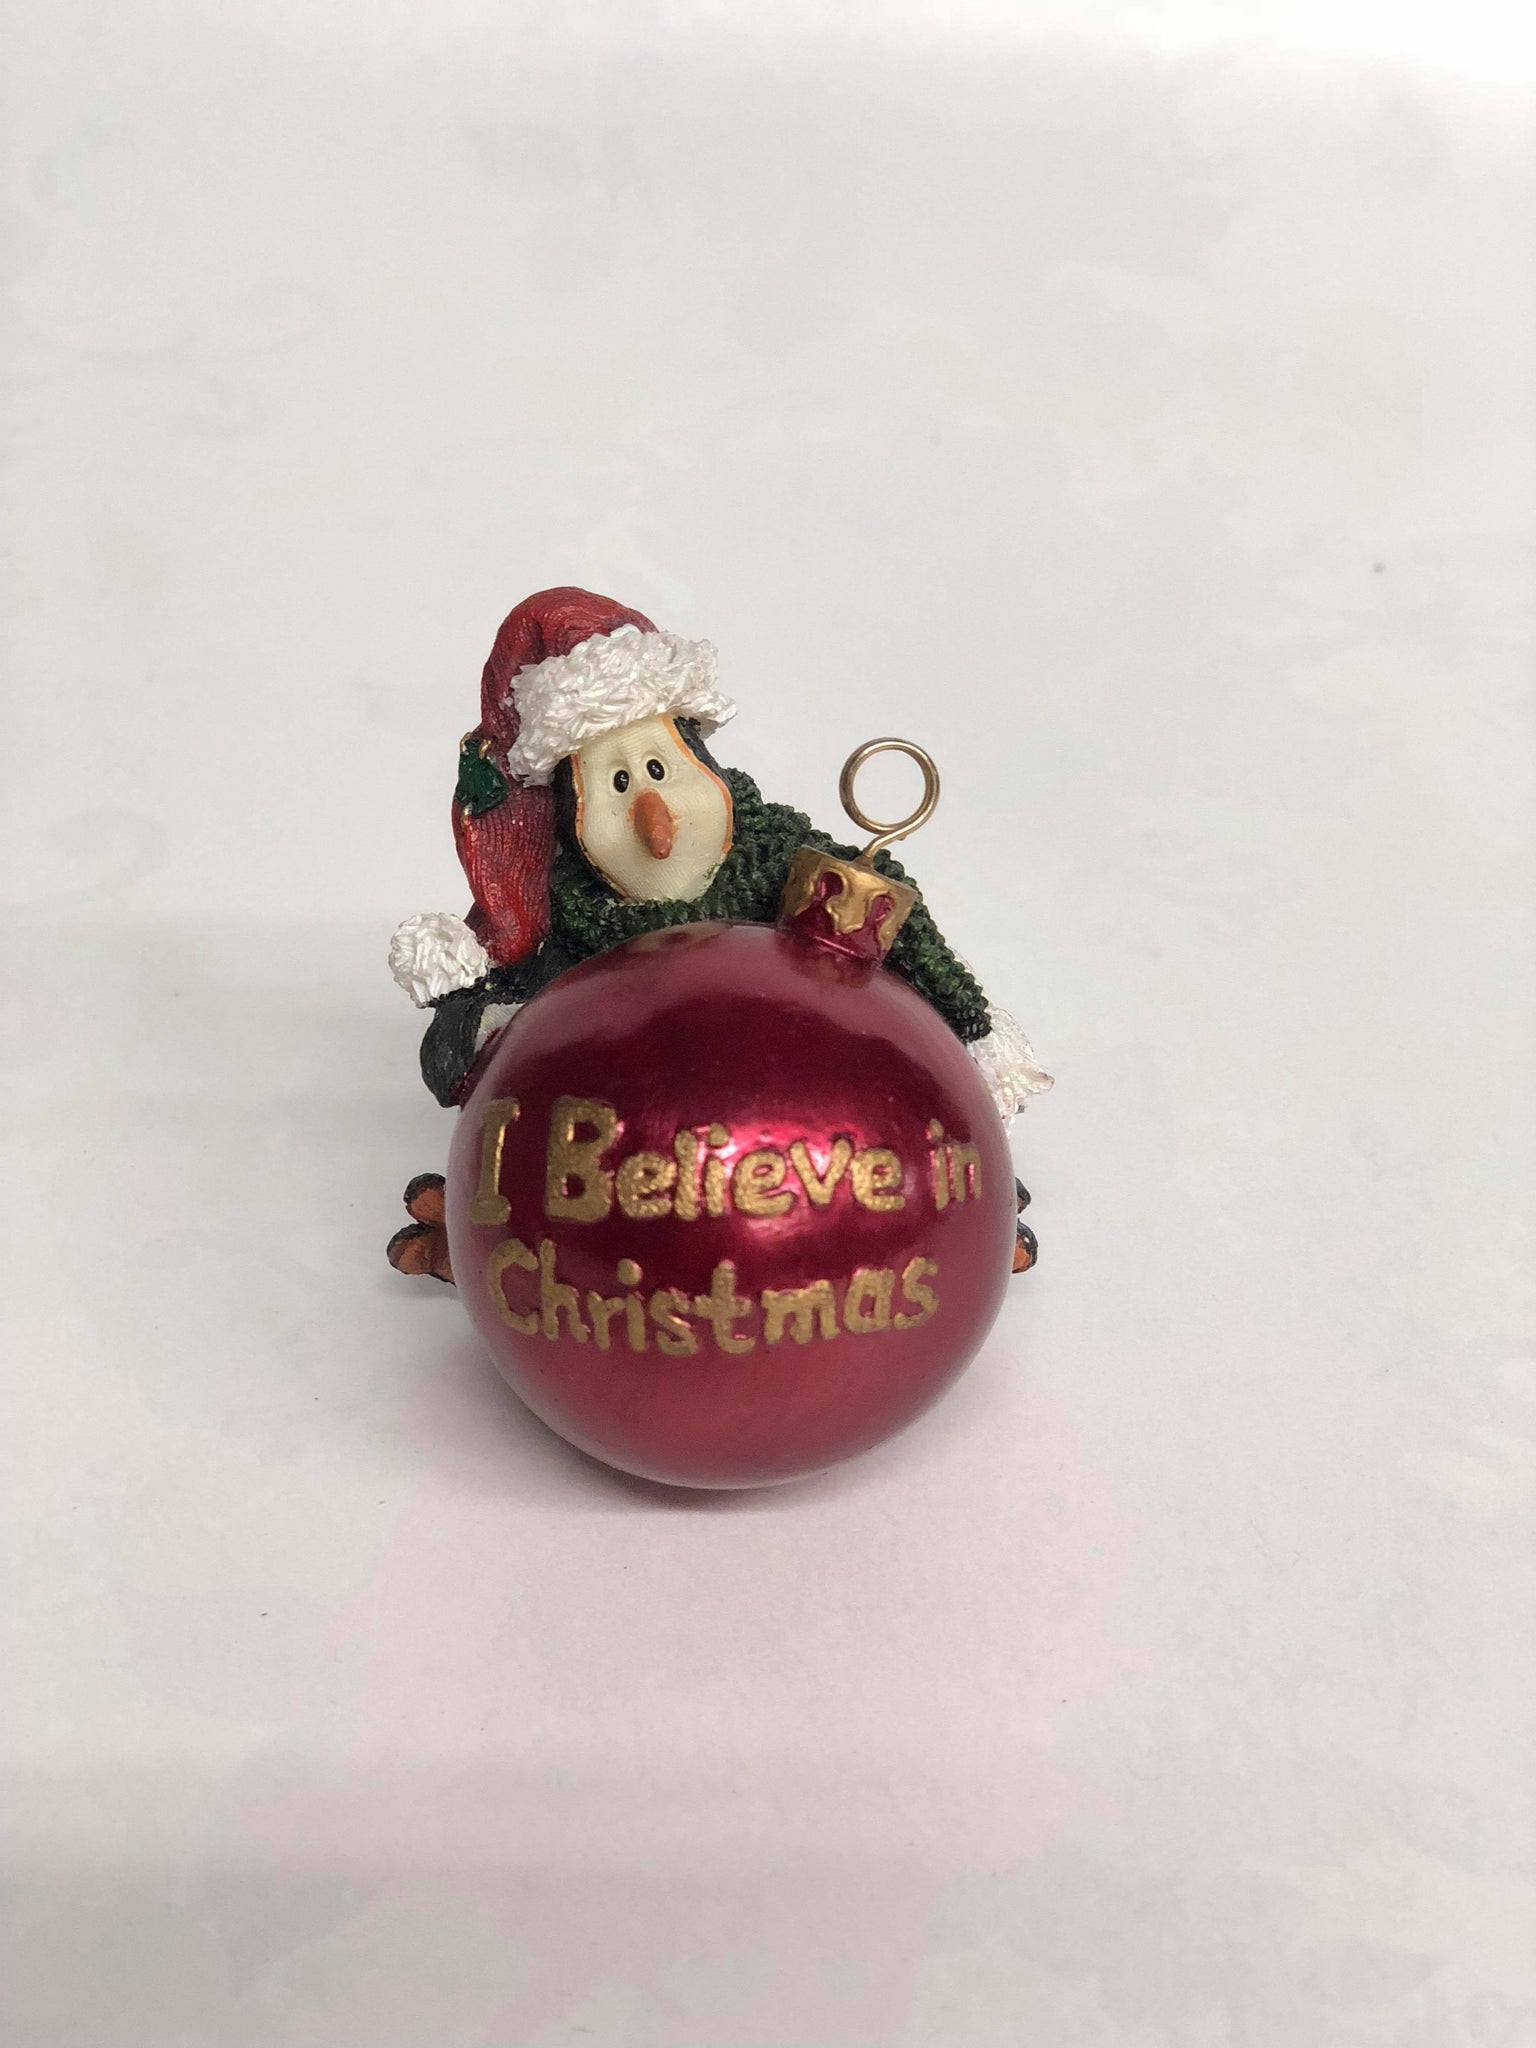 "I believe in Christmas" Figurine